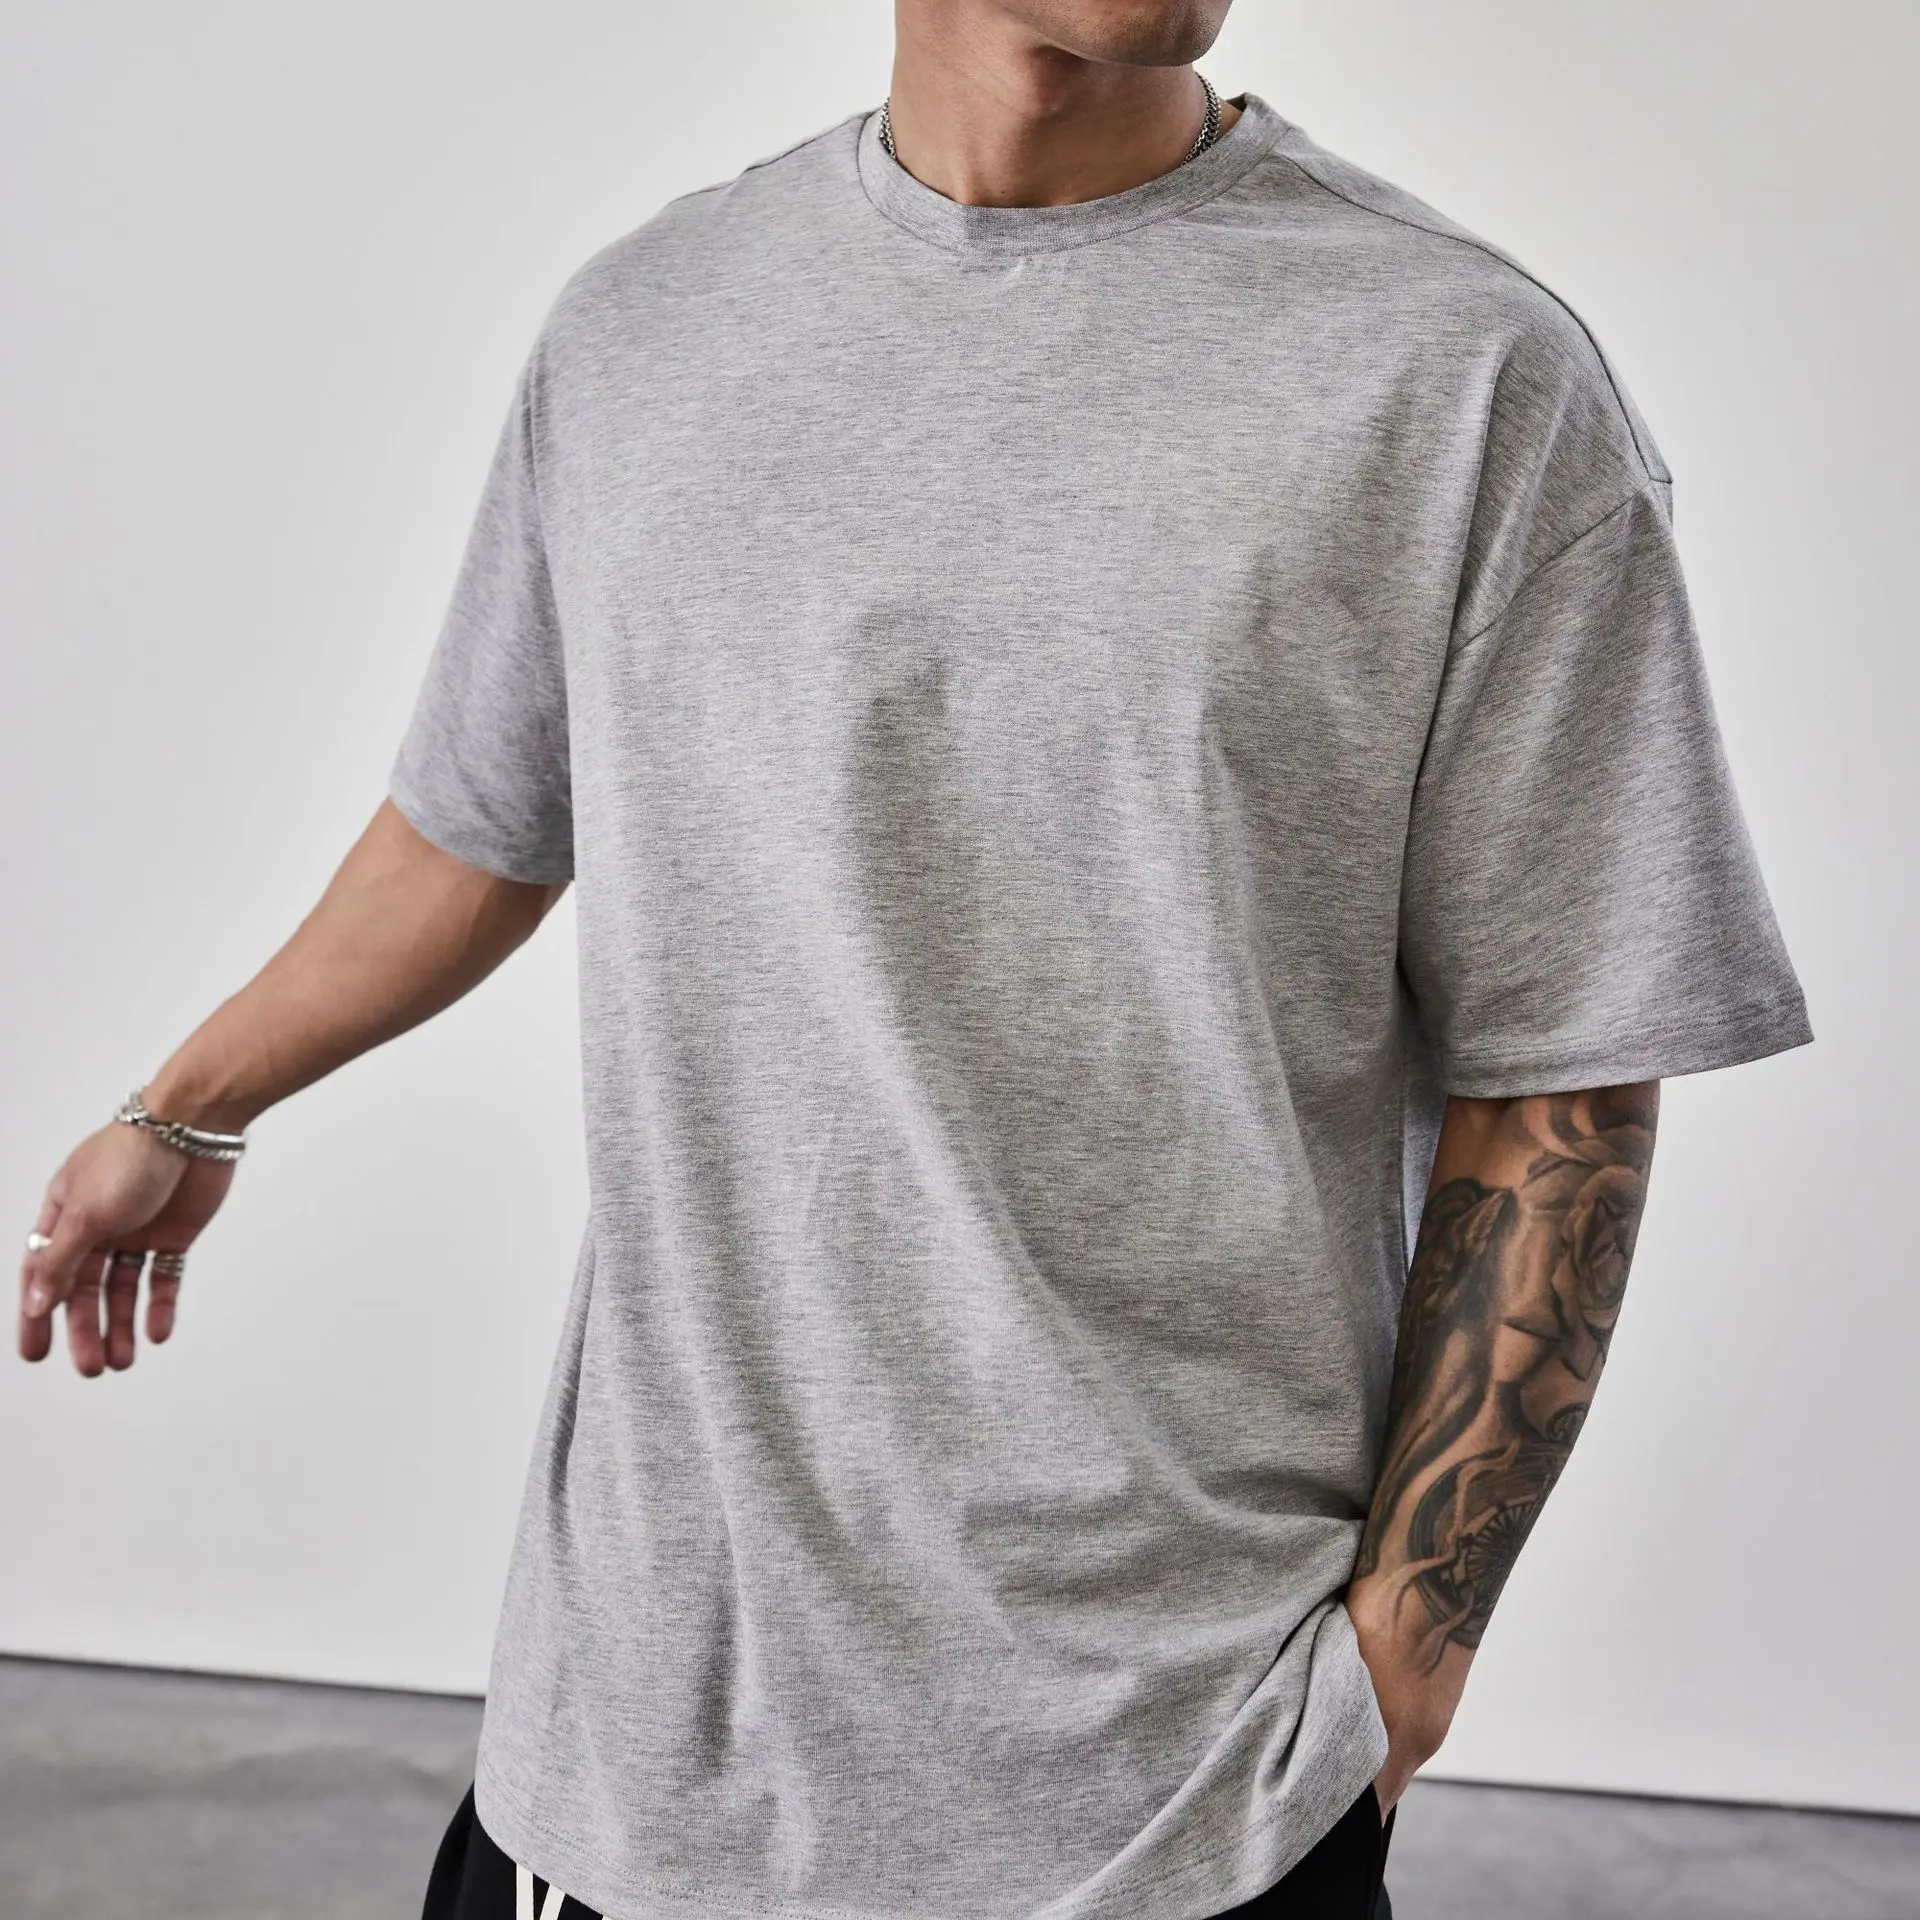 Aola Custom Logo New Design Workout Sports Wear T Shirt Men 95% Cotton ...